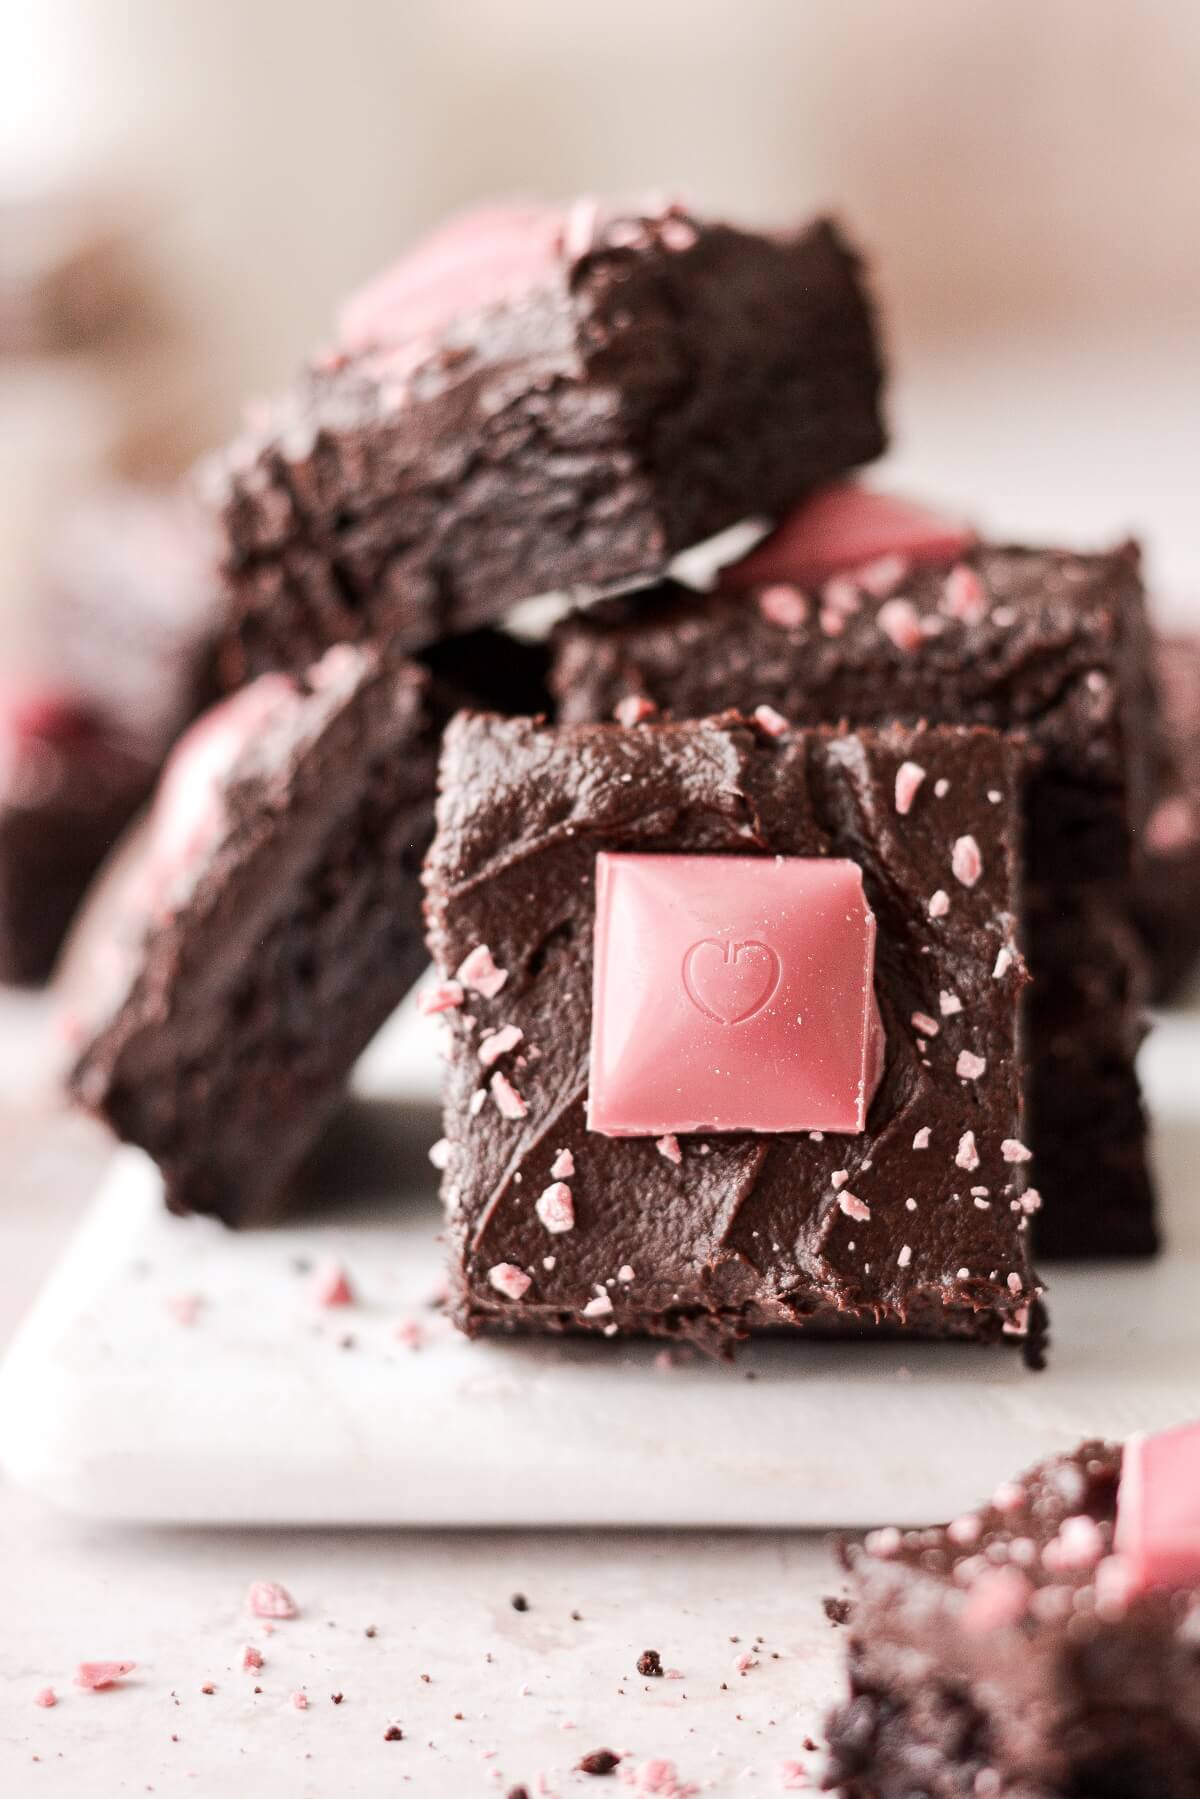 Squares of ruby chocolate on valentines fudge brownies.